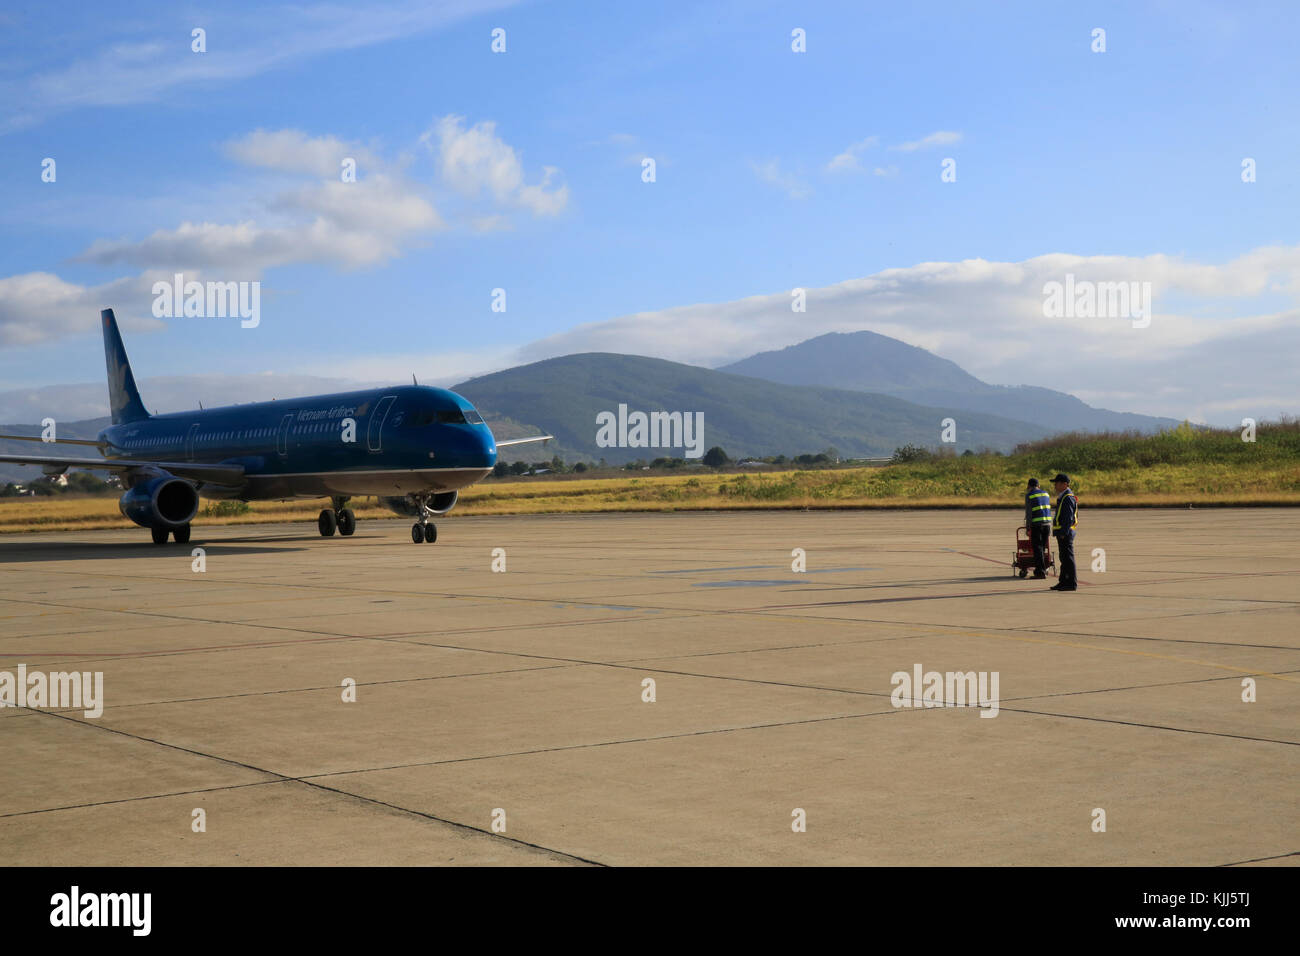 Aeropuerto de Dalat. Vietnam Airlines. Dalat. Vietnam. Foto de stock